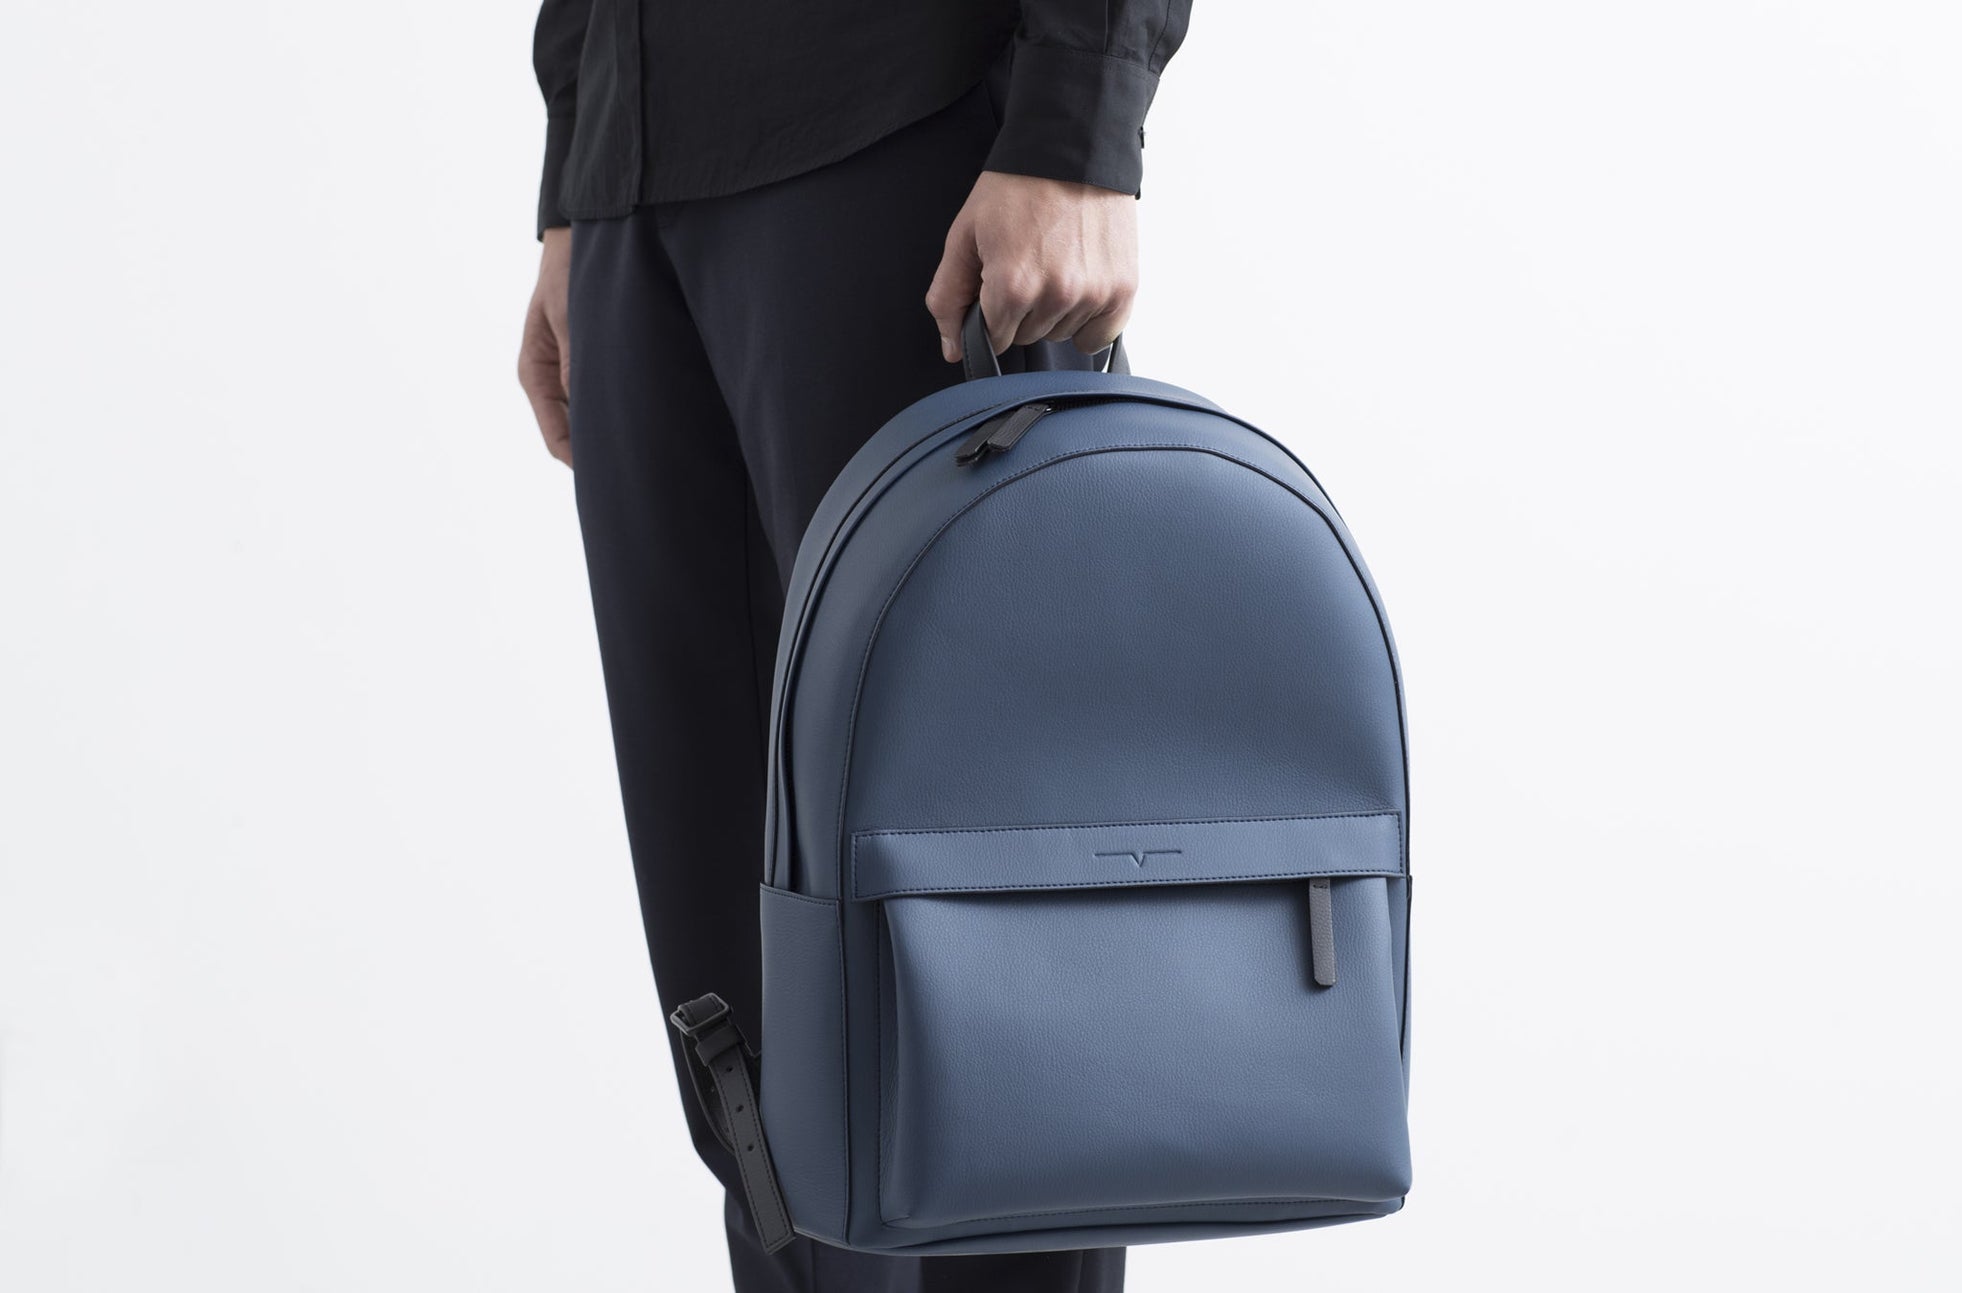 The Classic Backpack - Sample Sale in Technik in Denim and Black image 10